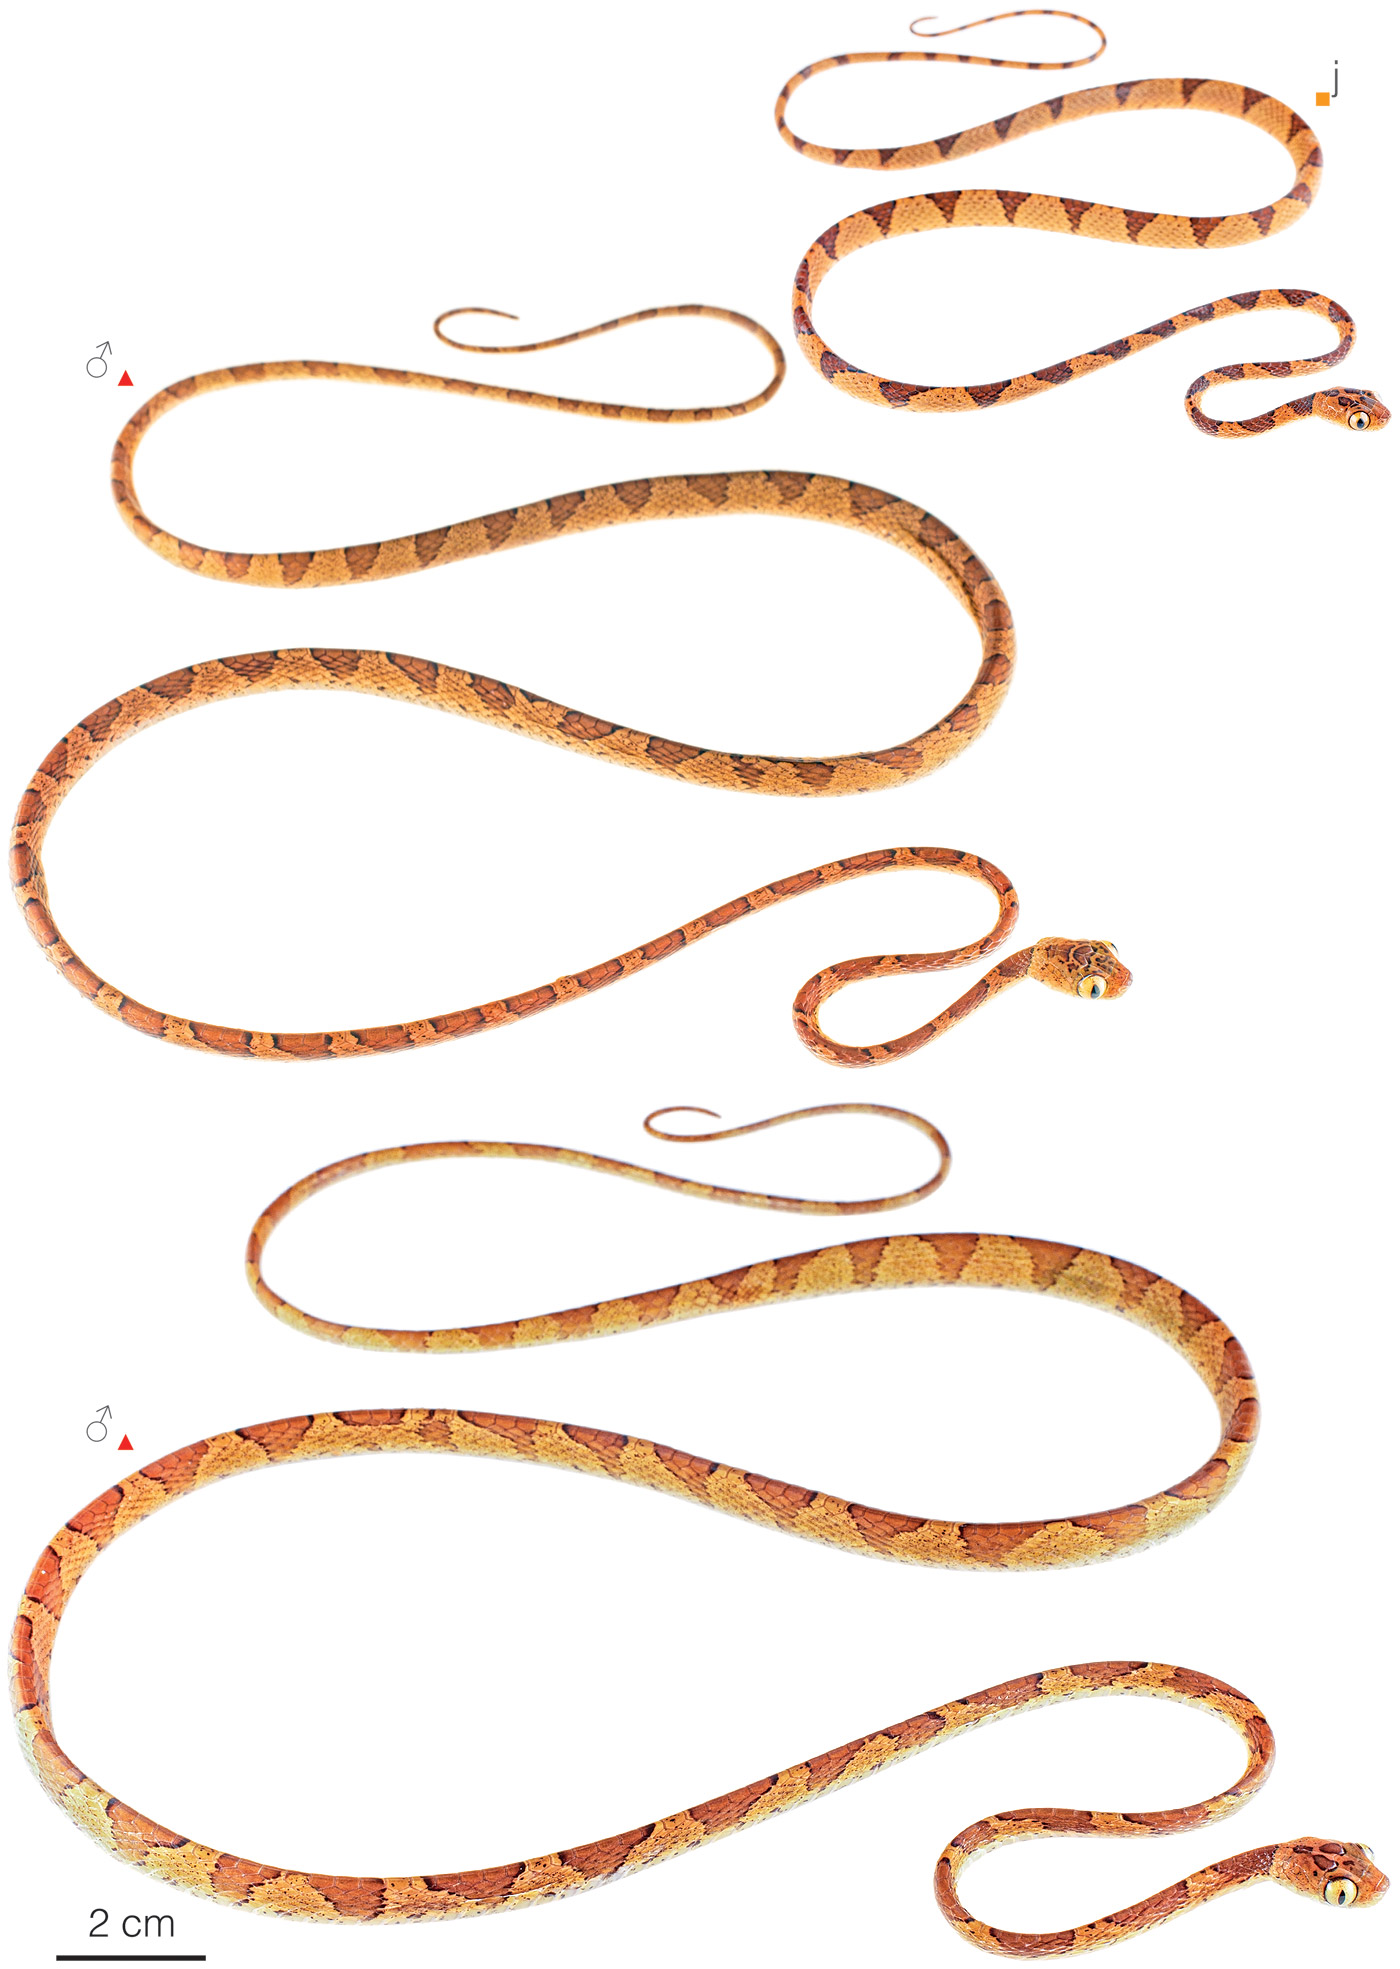 Figure showing variation among individuals of Imantodes lentiferus